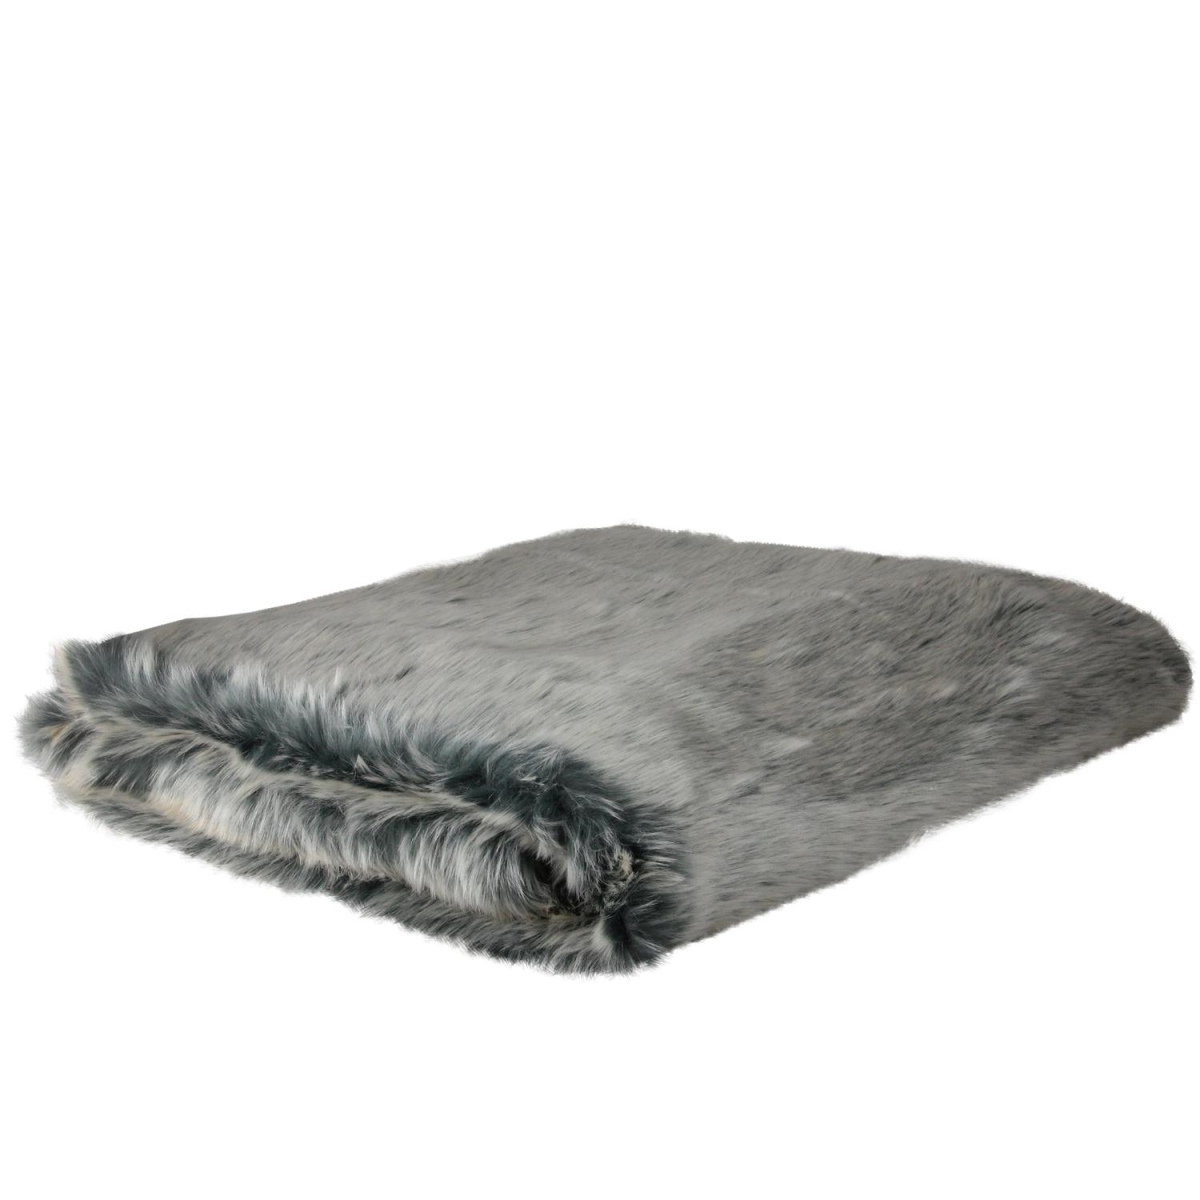 32667182 50 X 60 In. White & Gray Faux Fur Super Plush Throw Blanket